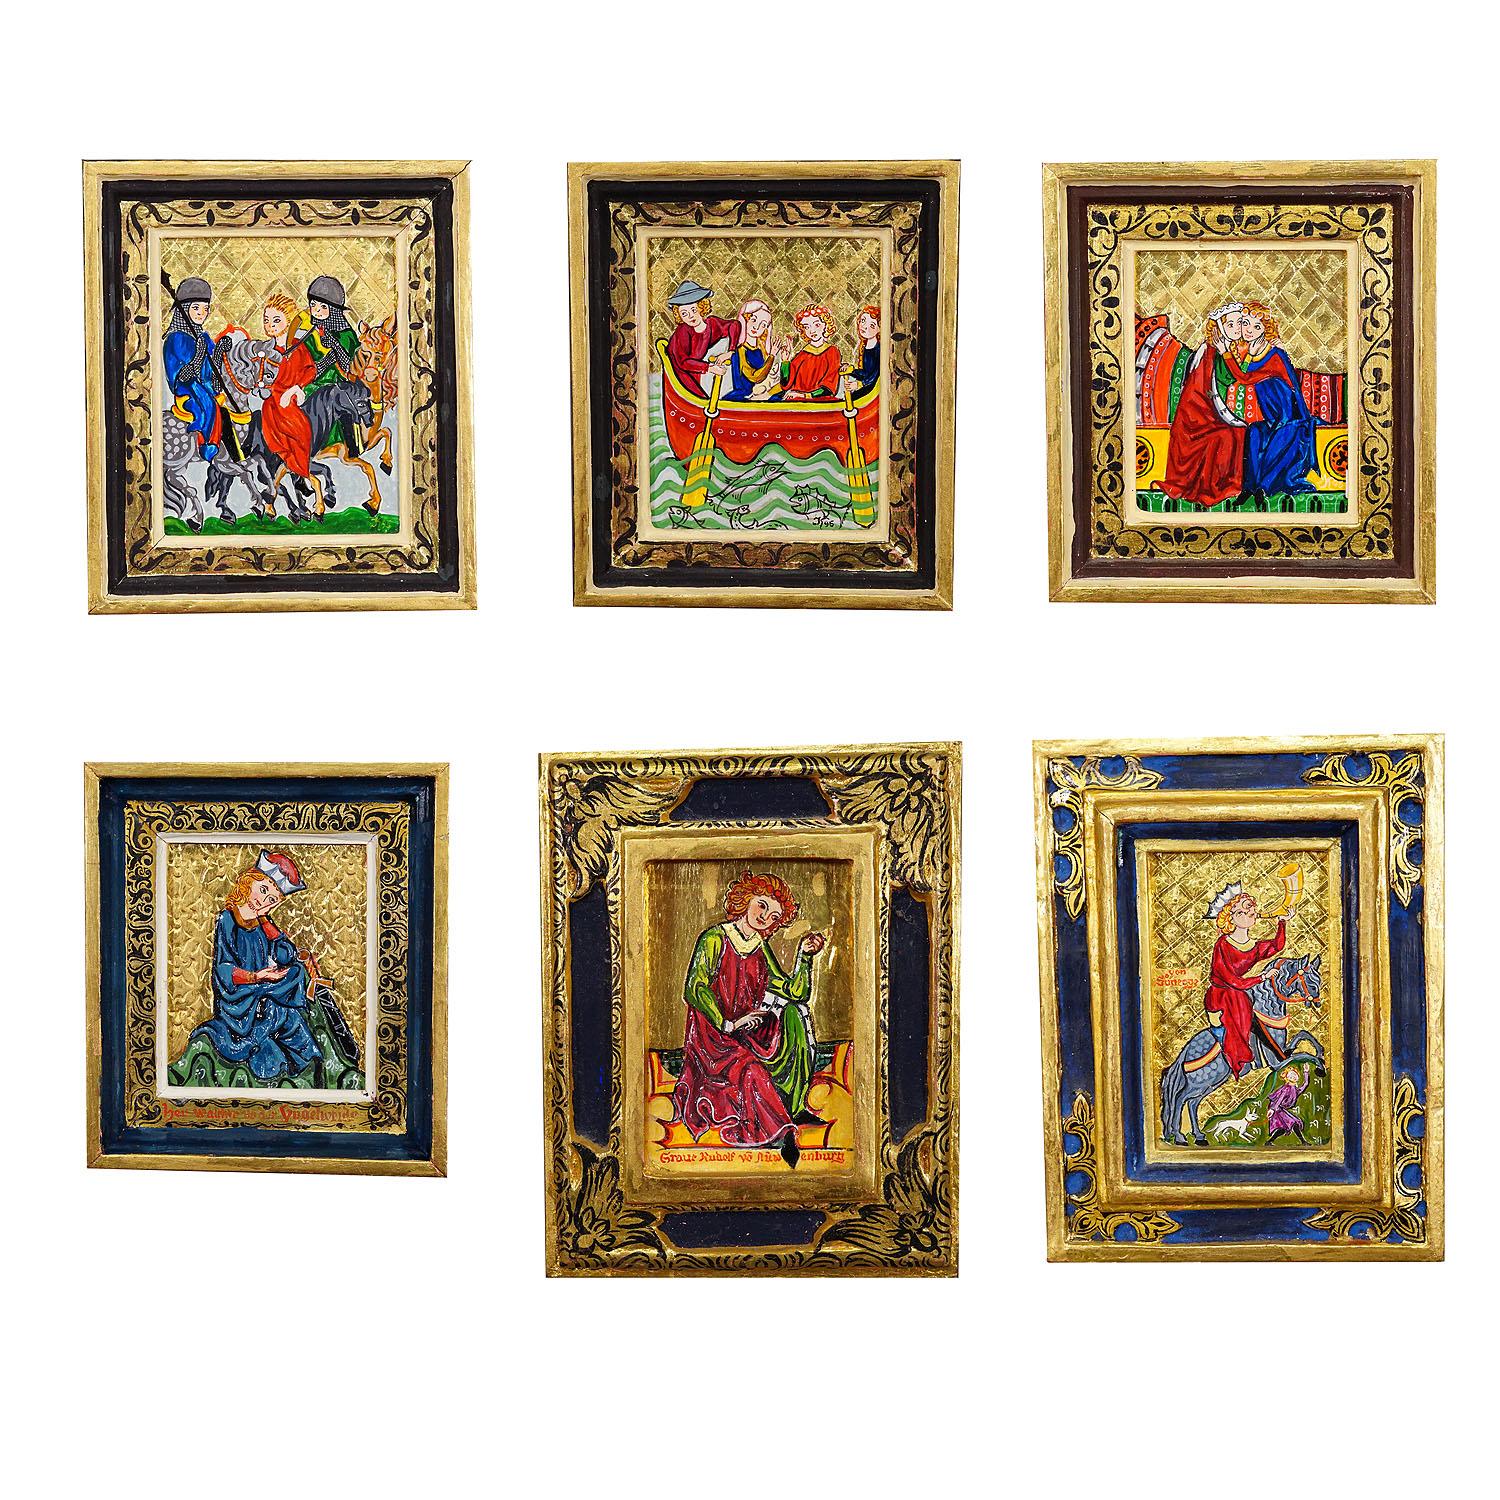 Ensemble de six peintures vintage représentant des scènes de ménestrels tirées du manuscrit de la chanson de Manesse

Un ensemble de six peintures représentant des scènes de ménestrels tirées du manuel de chansons de Manesse (Manesse Codex) qui a